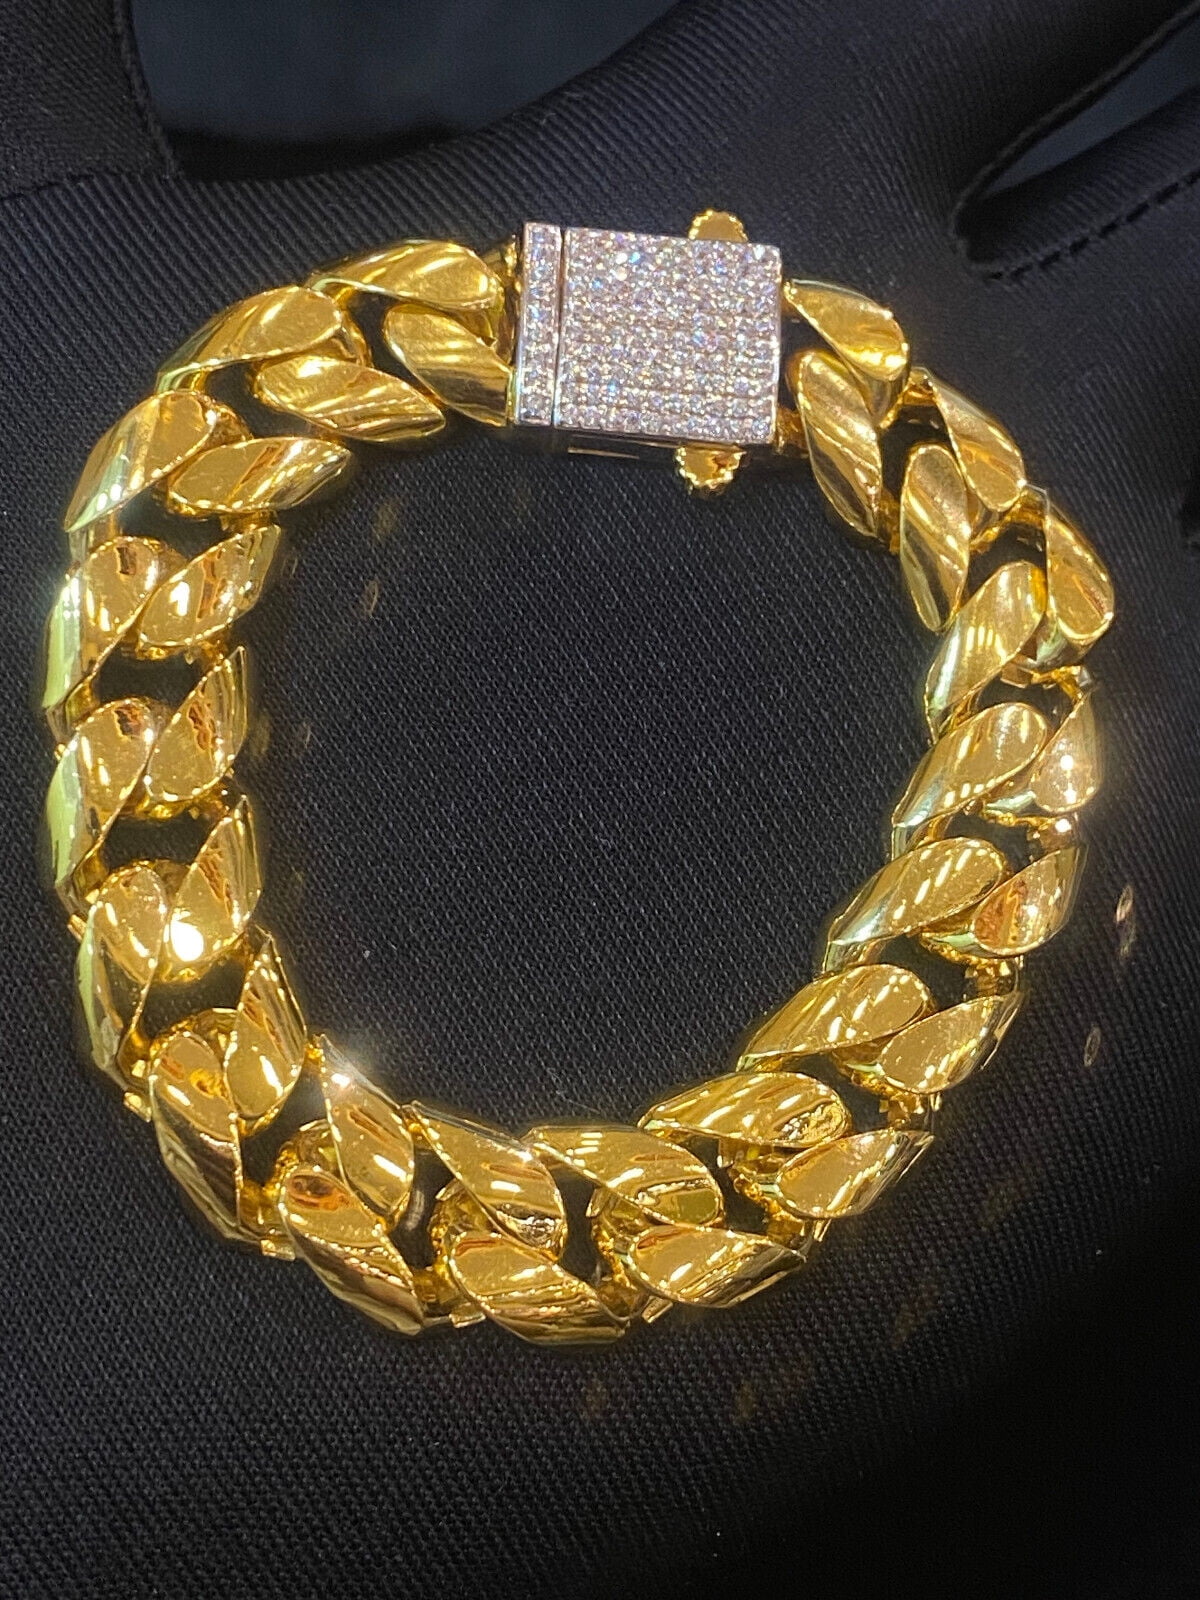 3 Round Superior Quality Gorgeous Design Golden Color Bracelet For Men -  Style C050, मेंस ब्रेसलेट - Soni Fashion, Rajkot | ID: 2849445741373